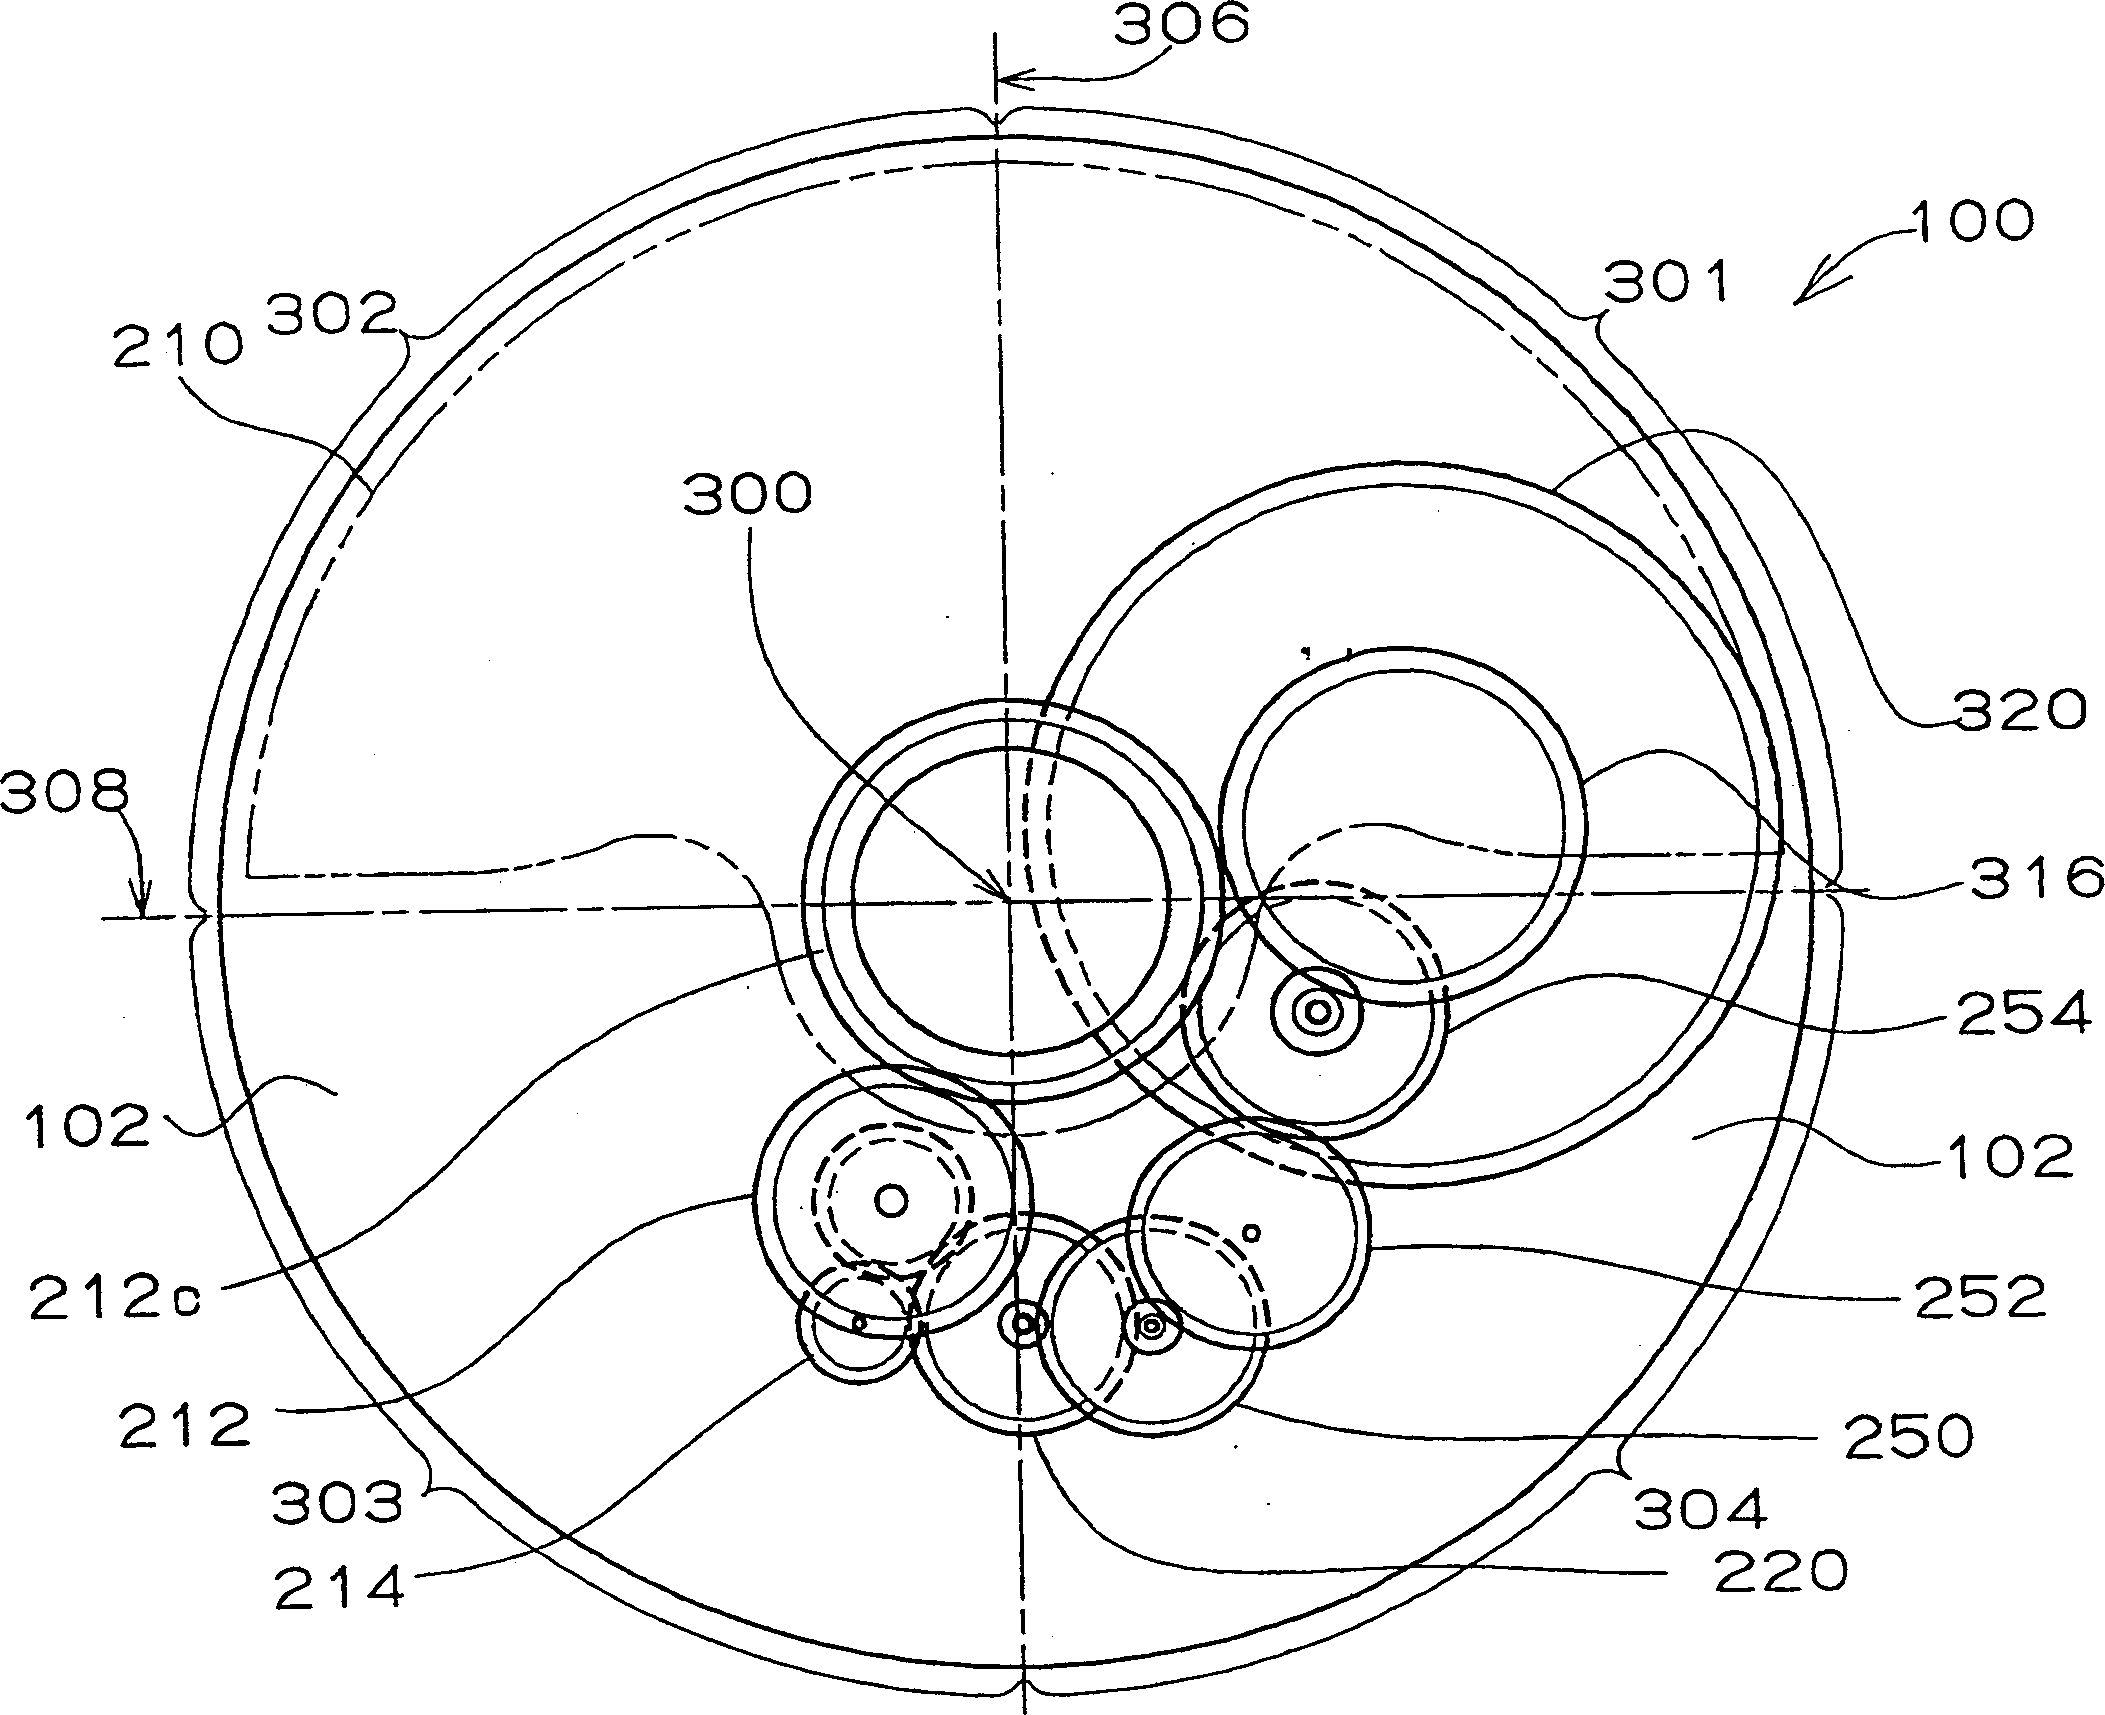 Self-winding timepiece having train wheel setting apparatus